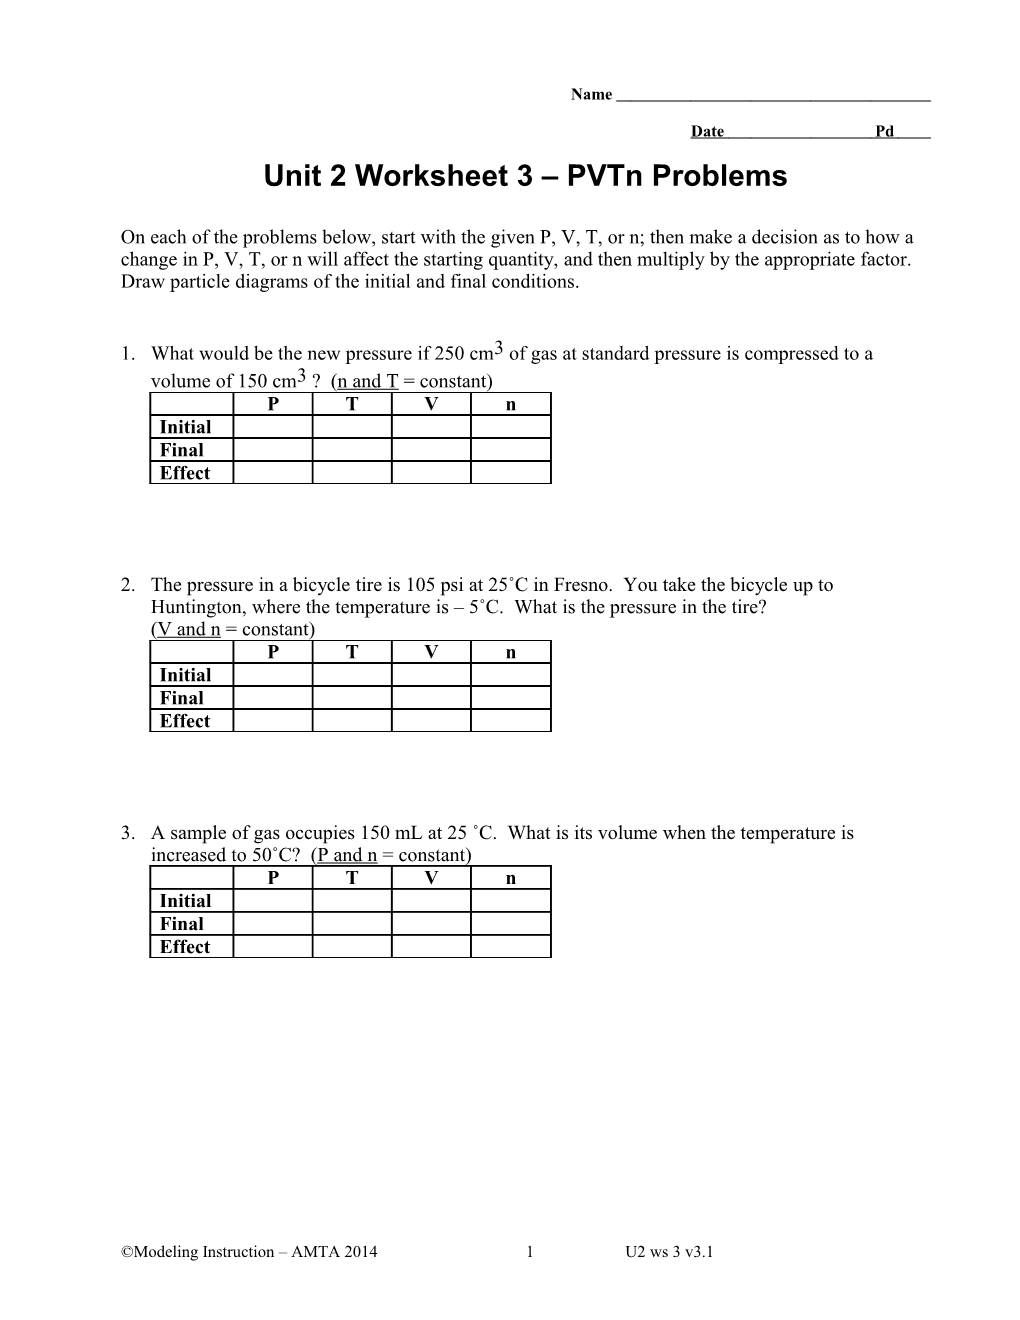 Unit 2 Worksheet 3 Pvtn Problems